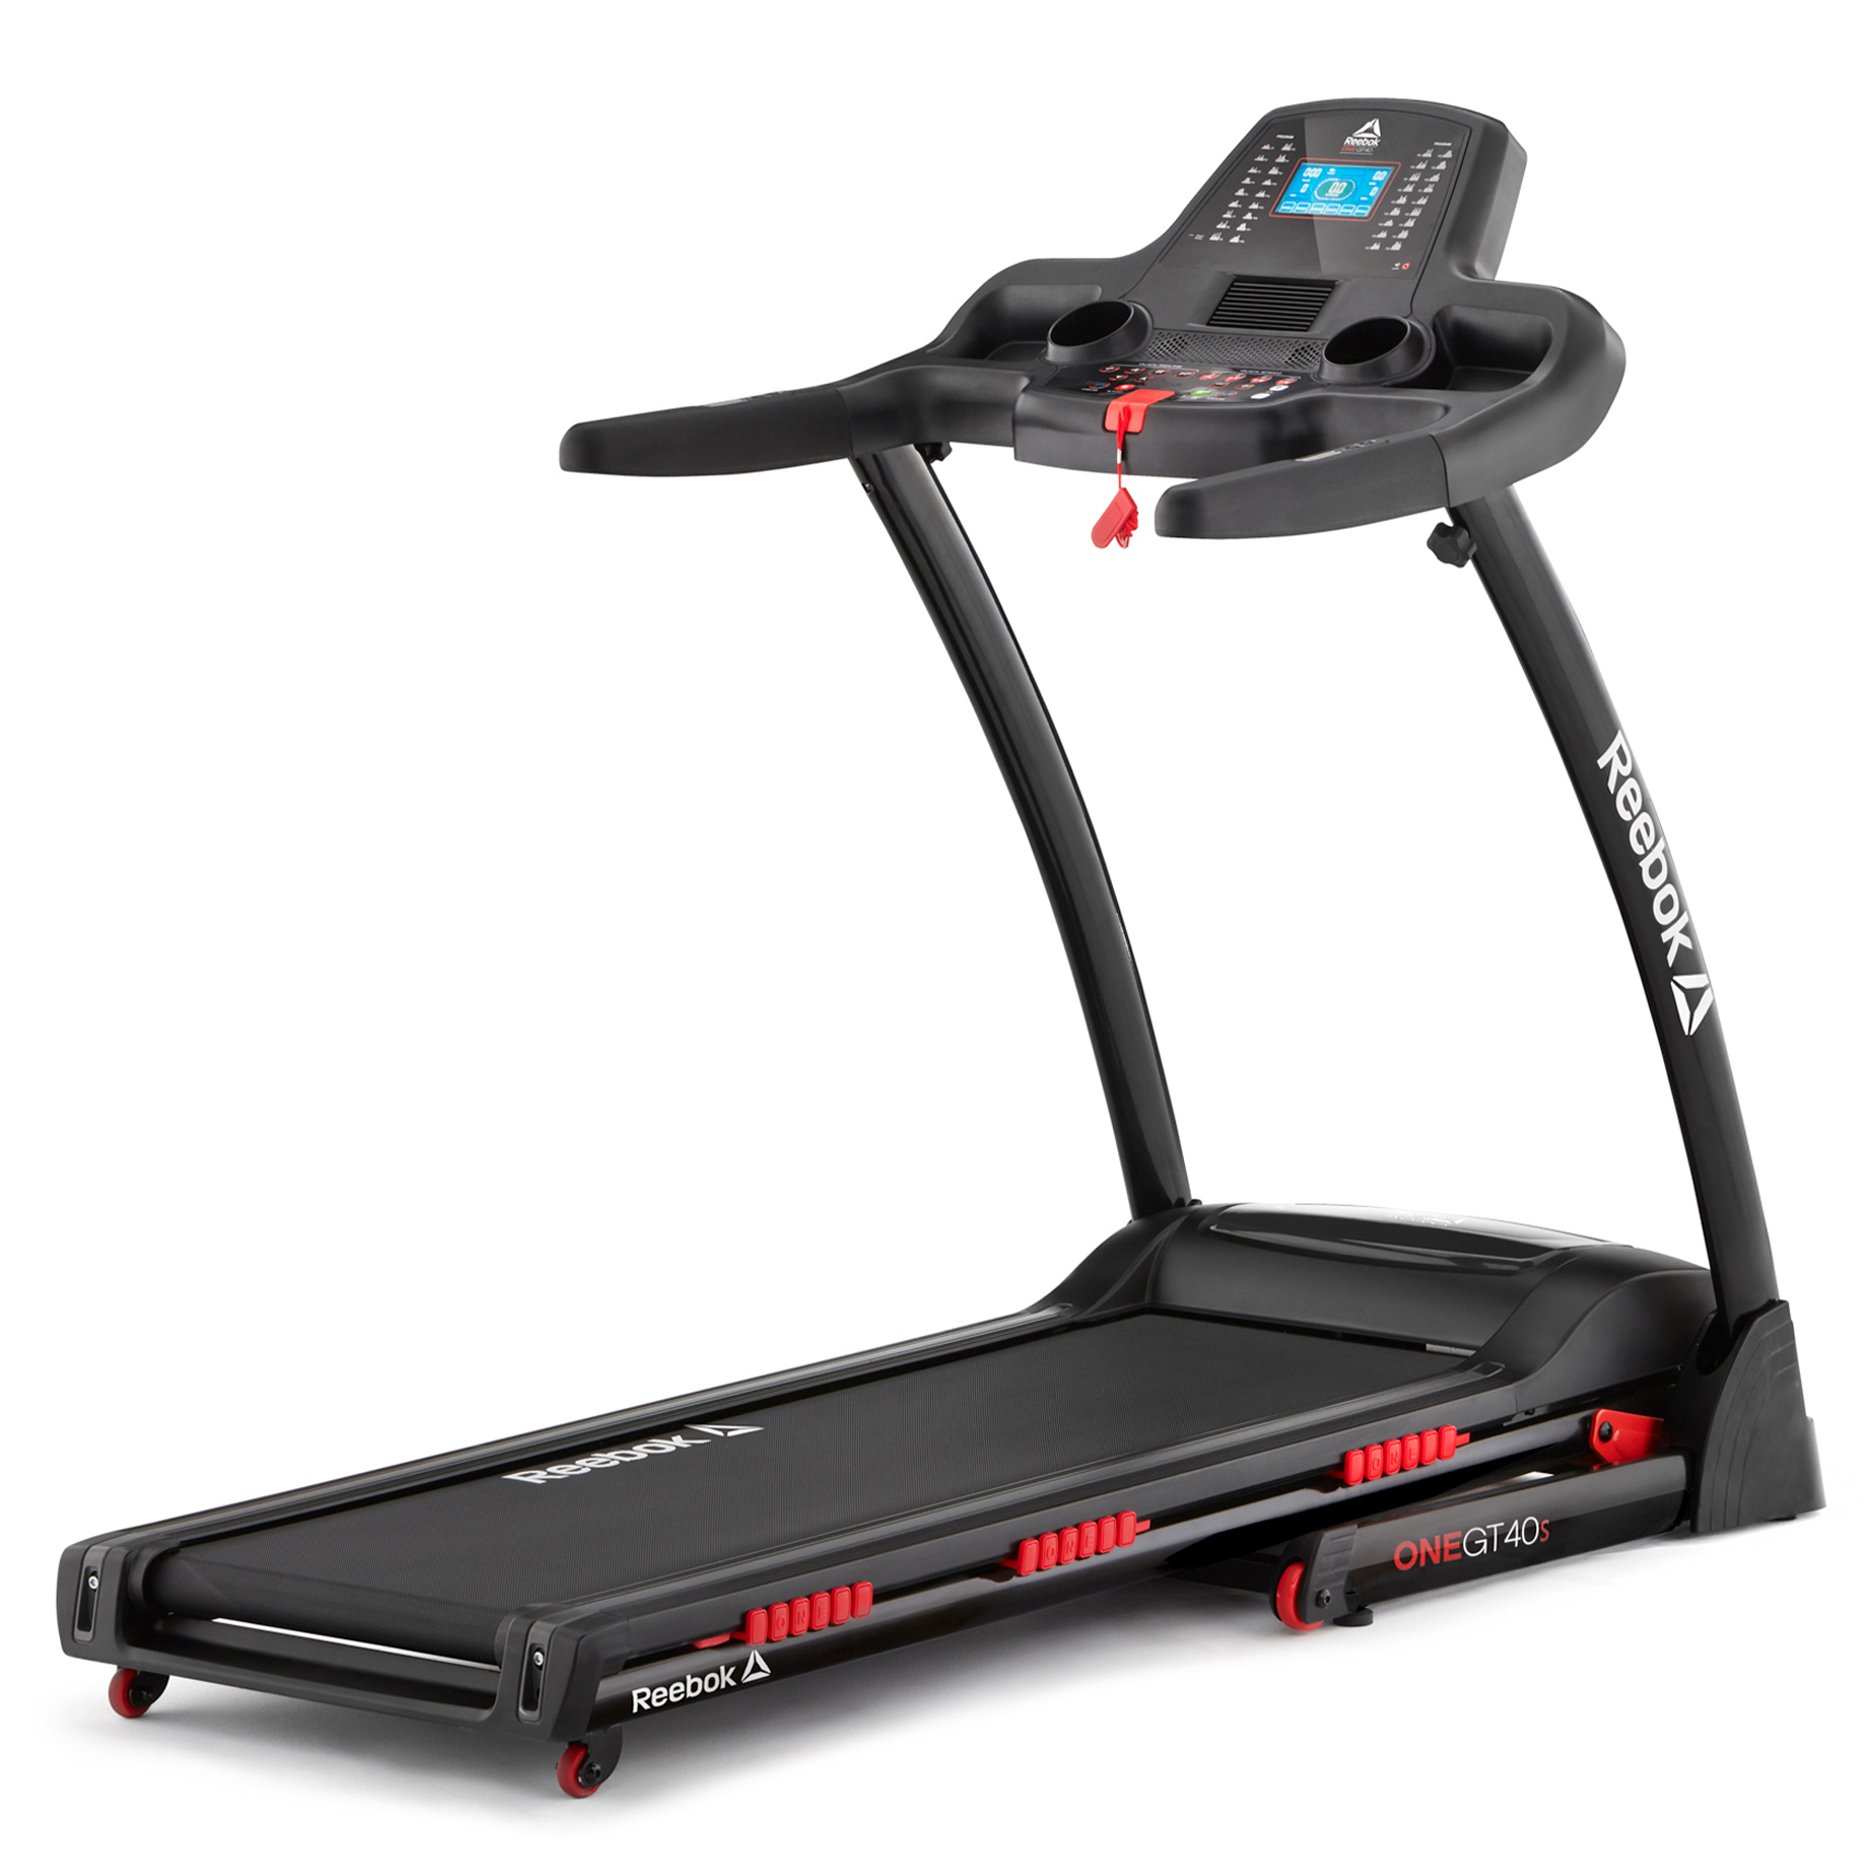 'Reebok One Gt40s Treadmill